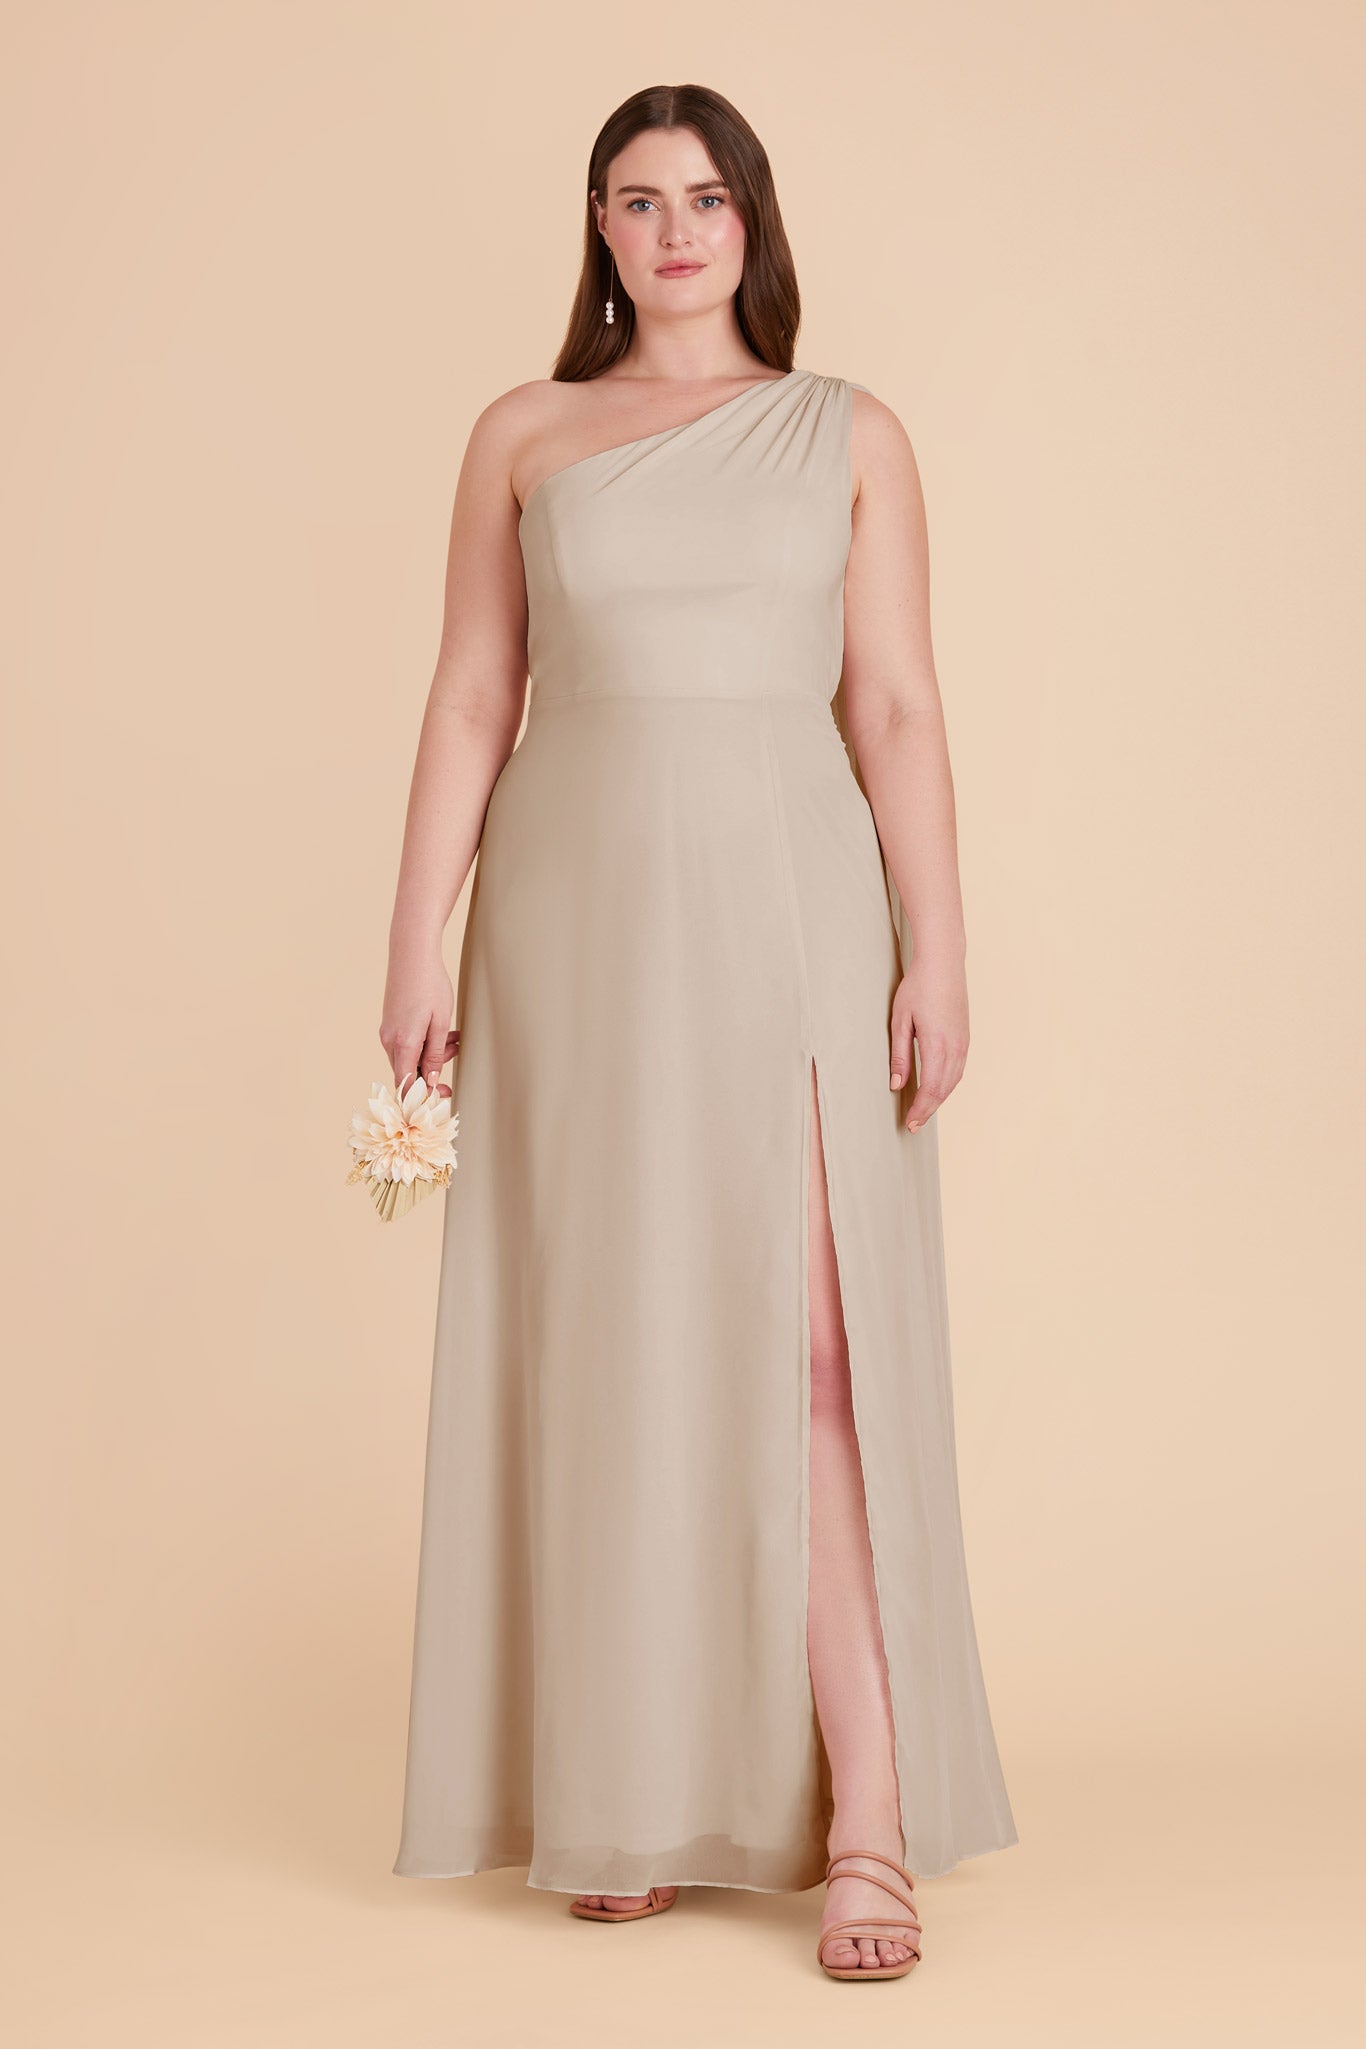  Neutral Champagne Melissa Chiffon Dress by Birdy Grey